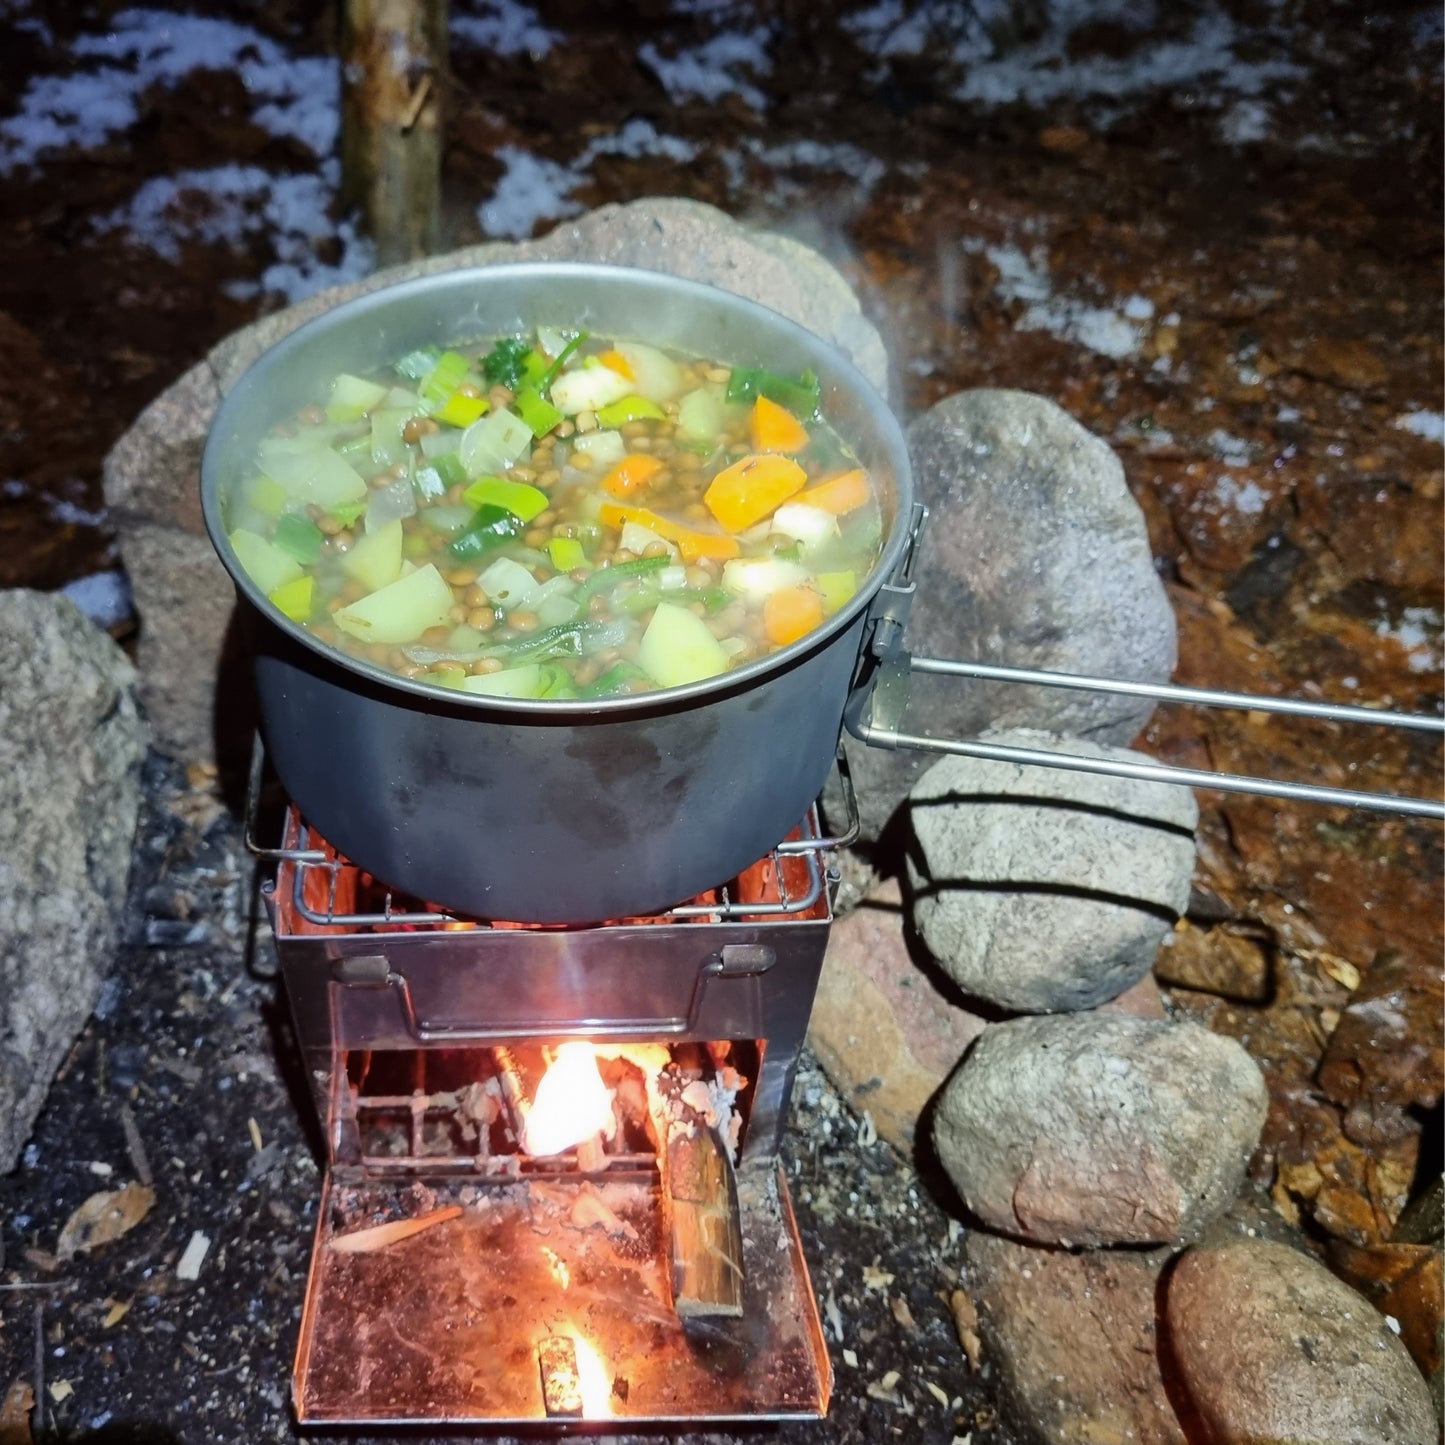 
                  
                    Titanium Camping Cookware Set - 1600ml/54.1 fl oz - SilverAnt Outdoors
                  
                